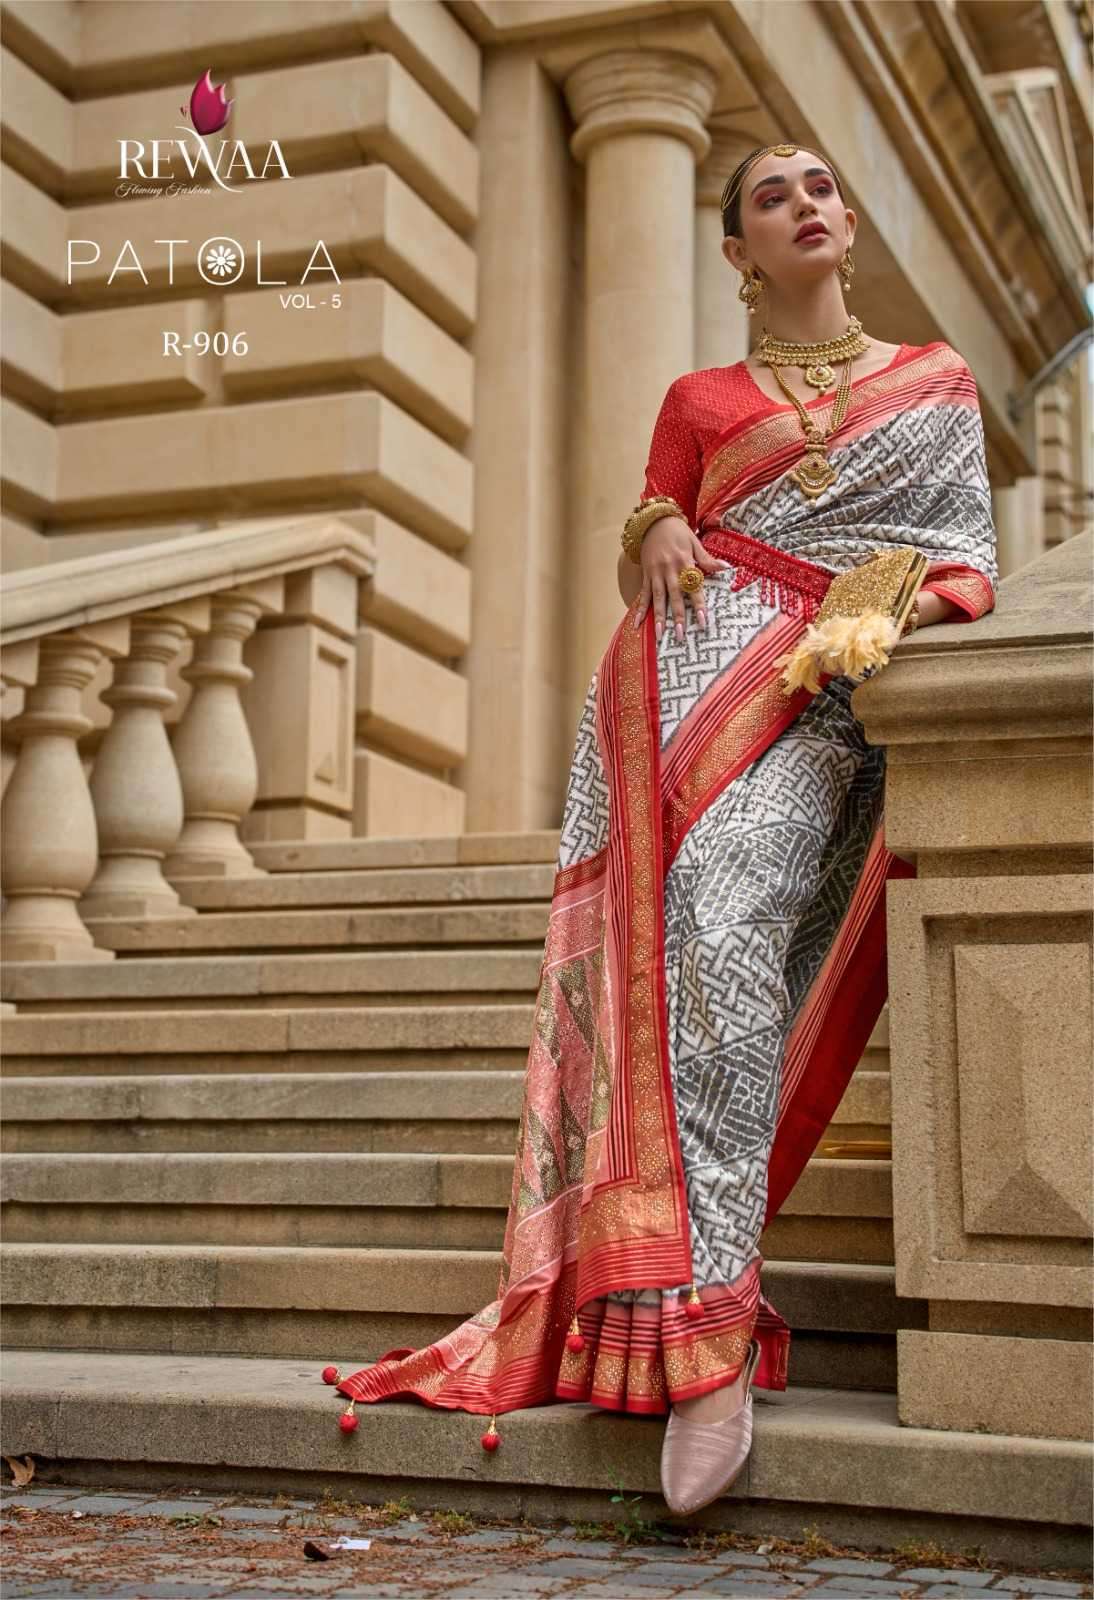 Rewaa Fashion patola vol 5 Silk with Traditional Patola sare...